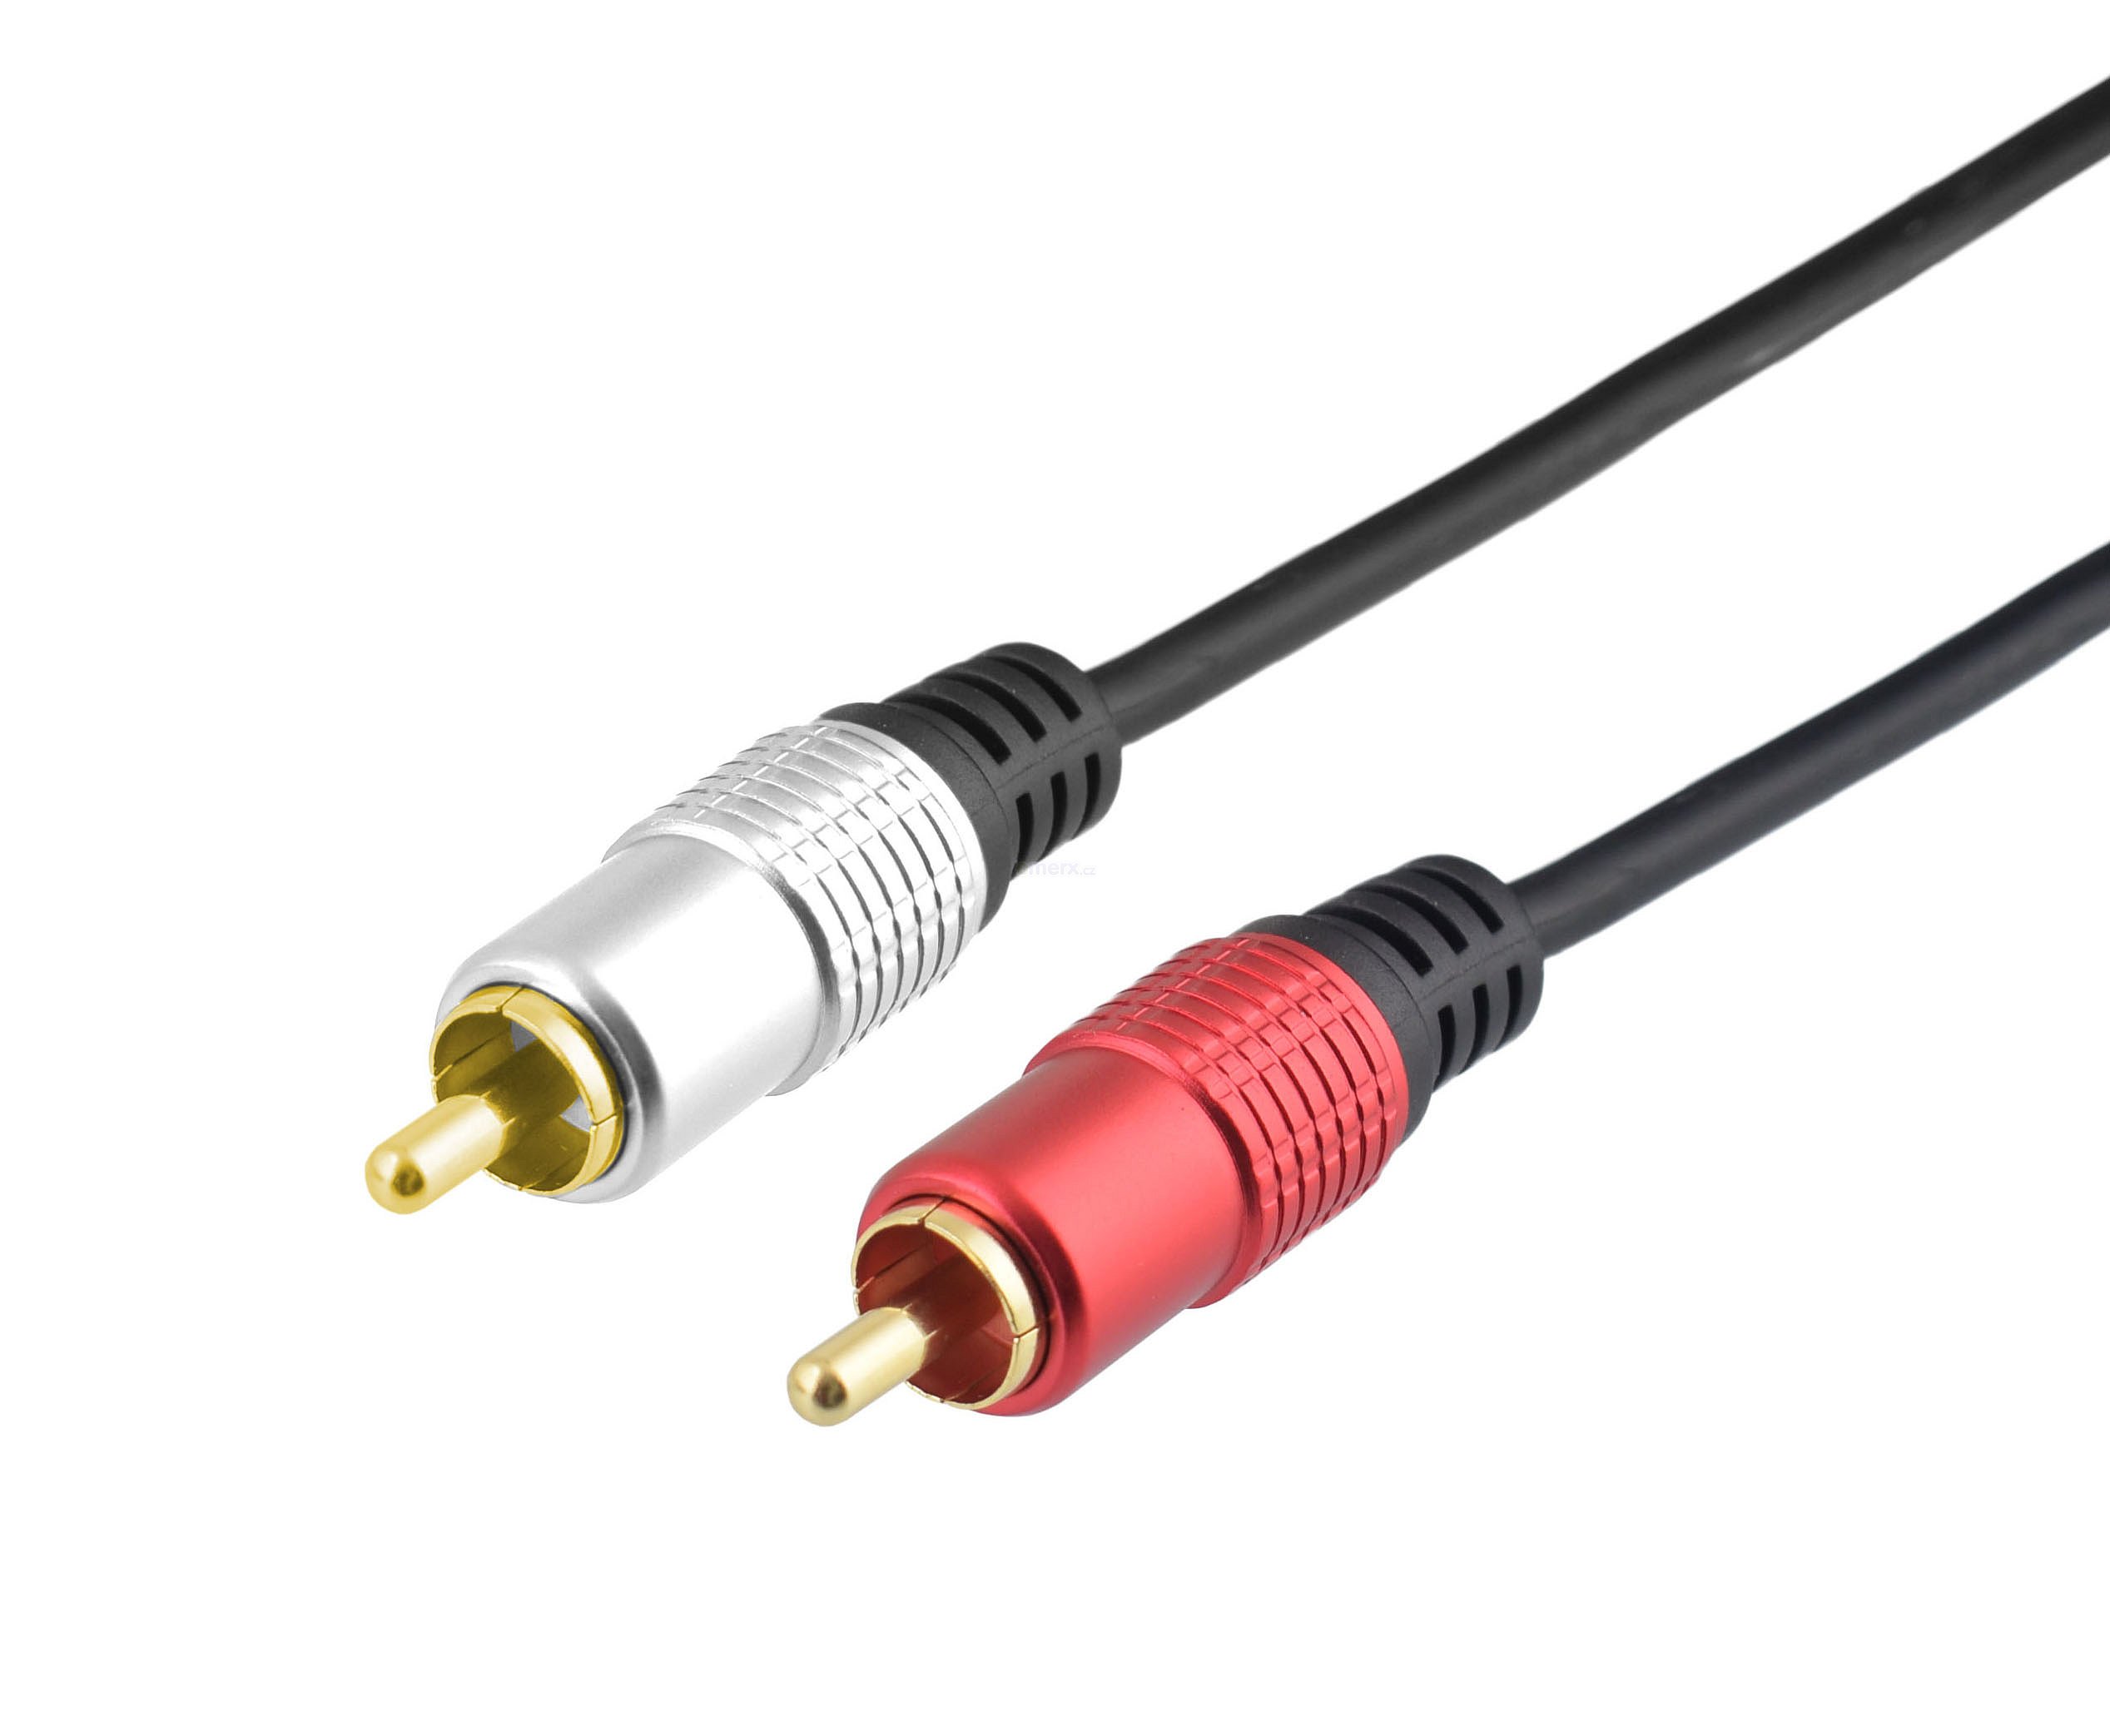 Propojovací audio kabel 2x CINCH vidlice na 2x CINCH vidlice STEREO, 2m. (HS-RR001-2)